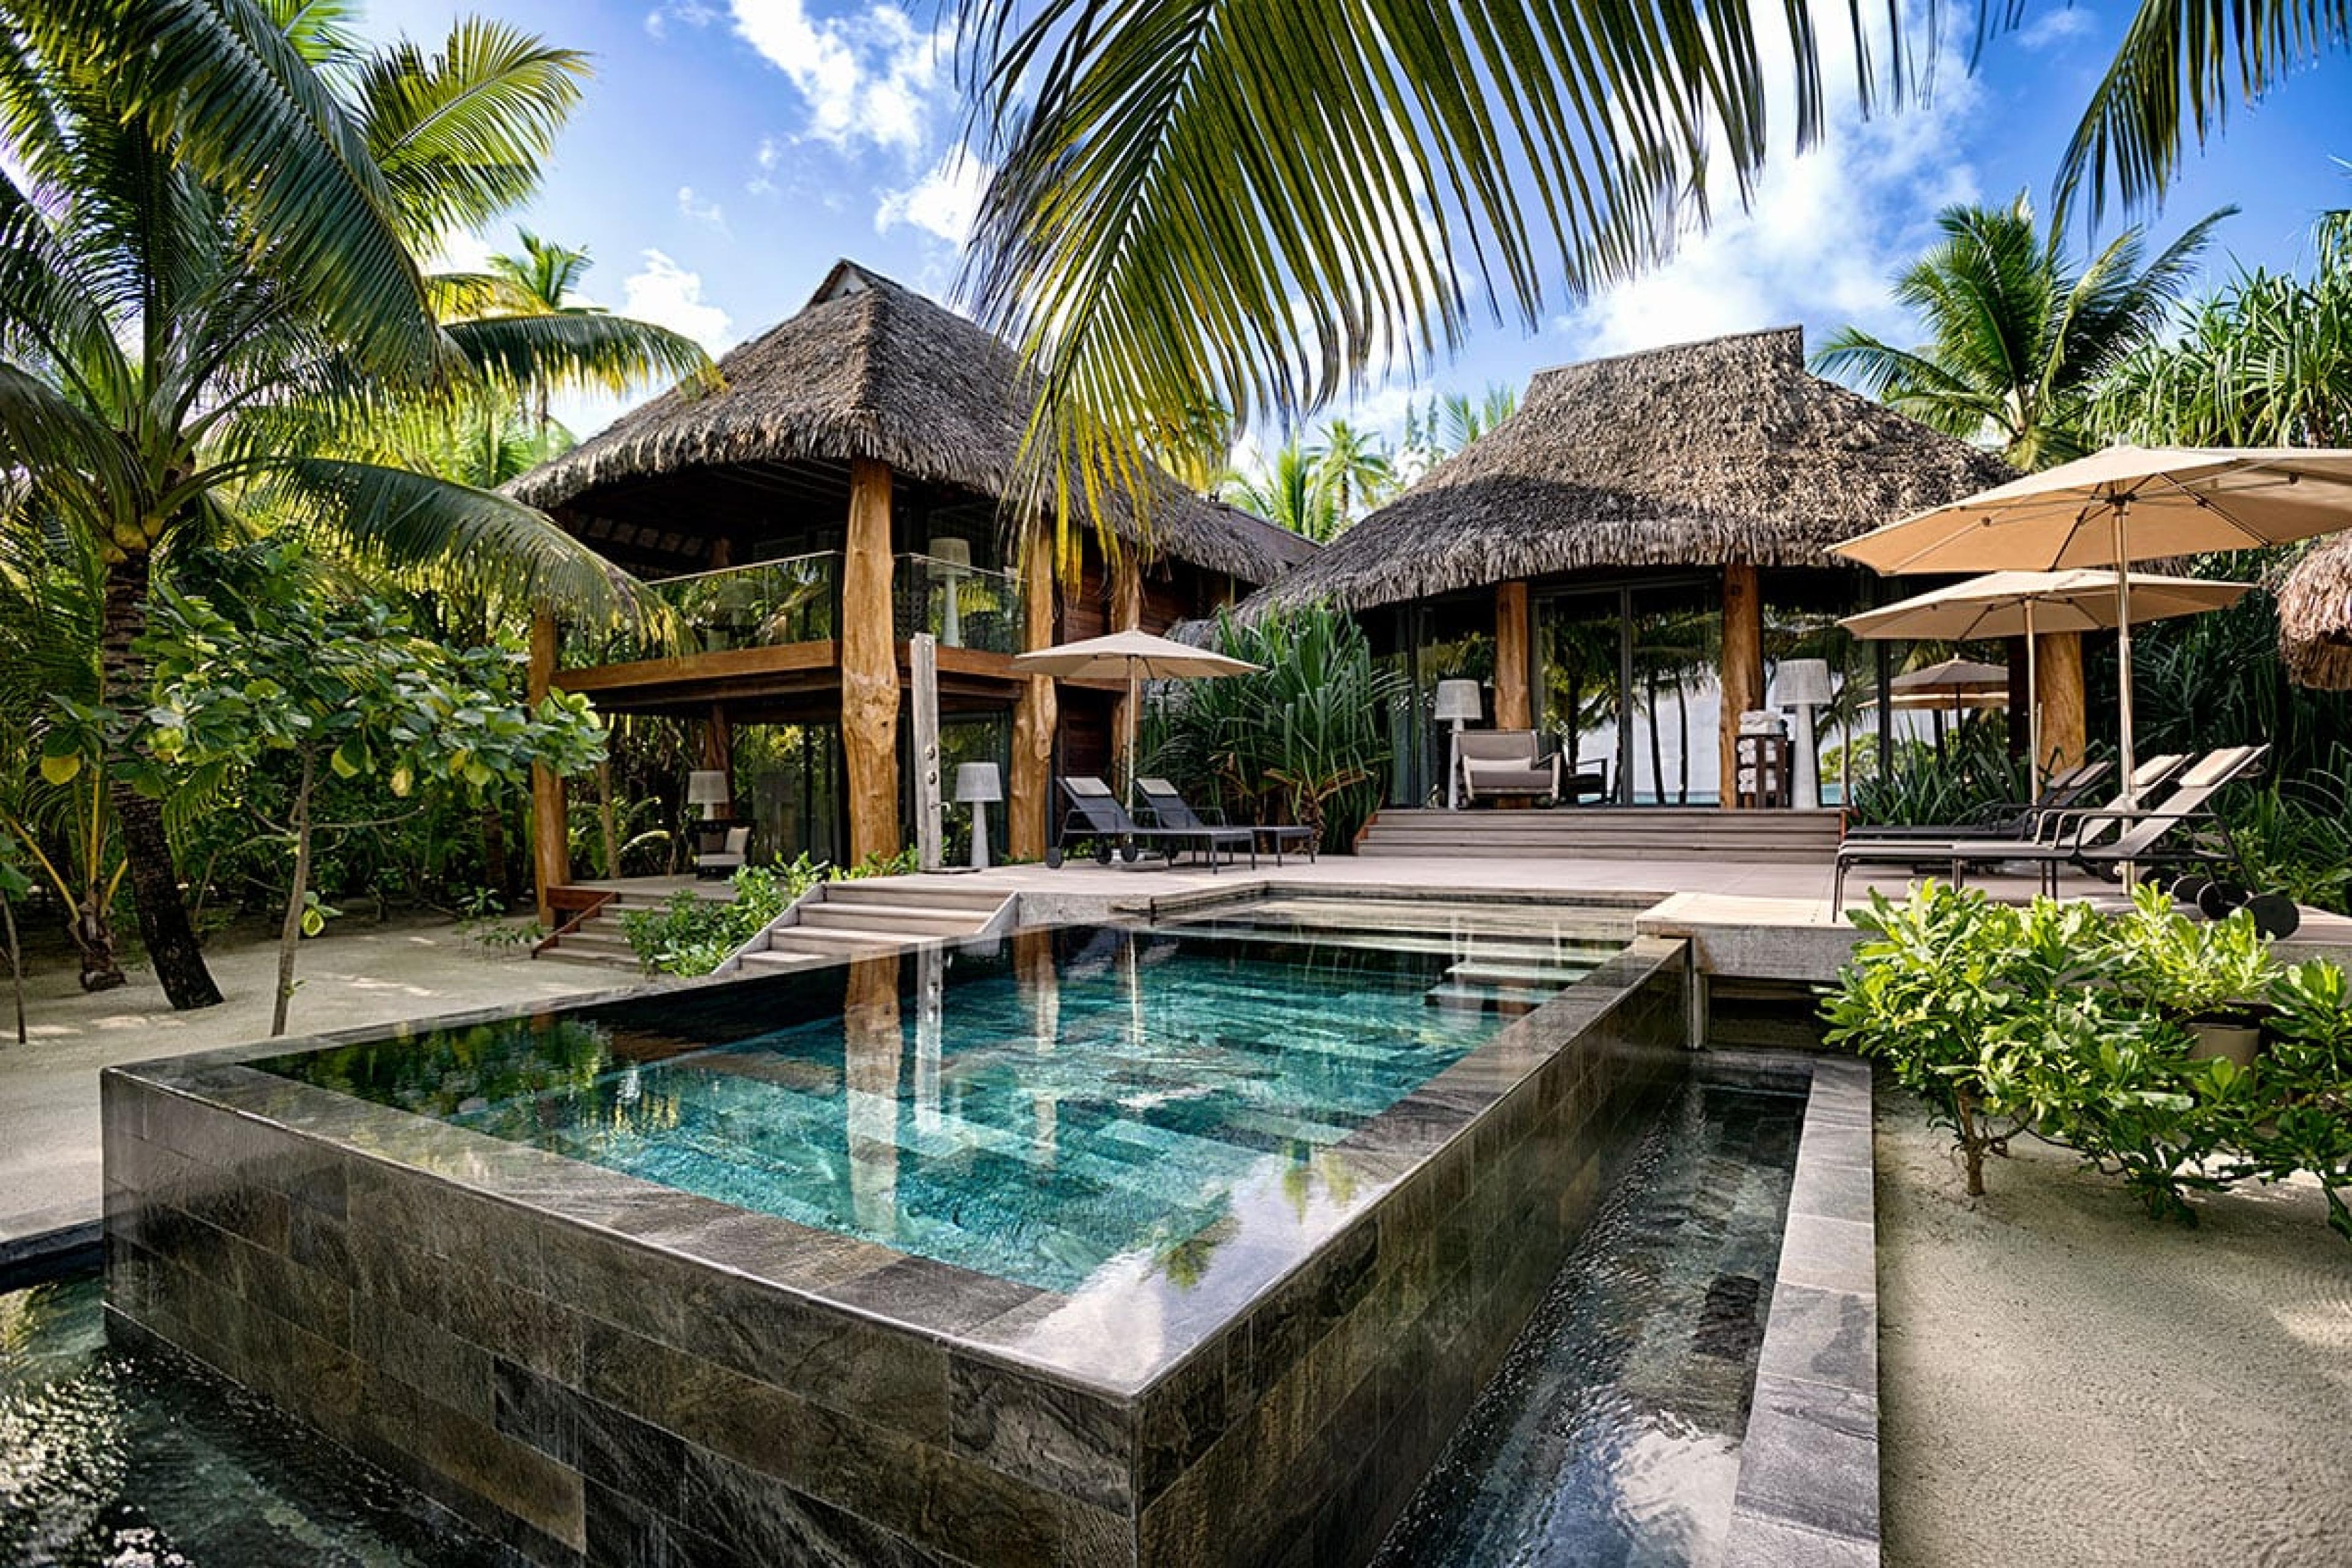 villa with private pool and polynesian architecture